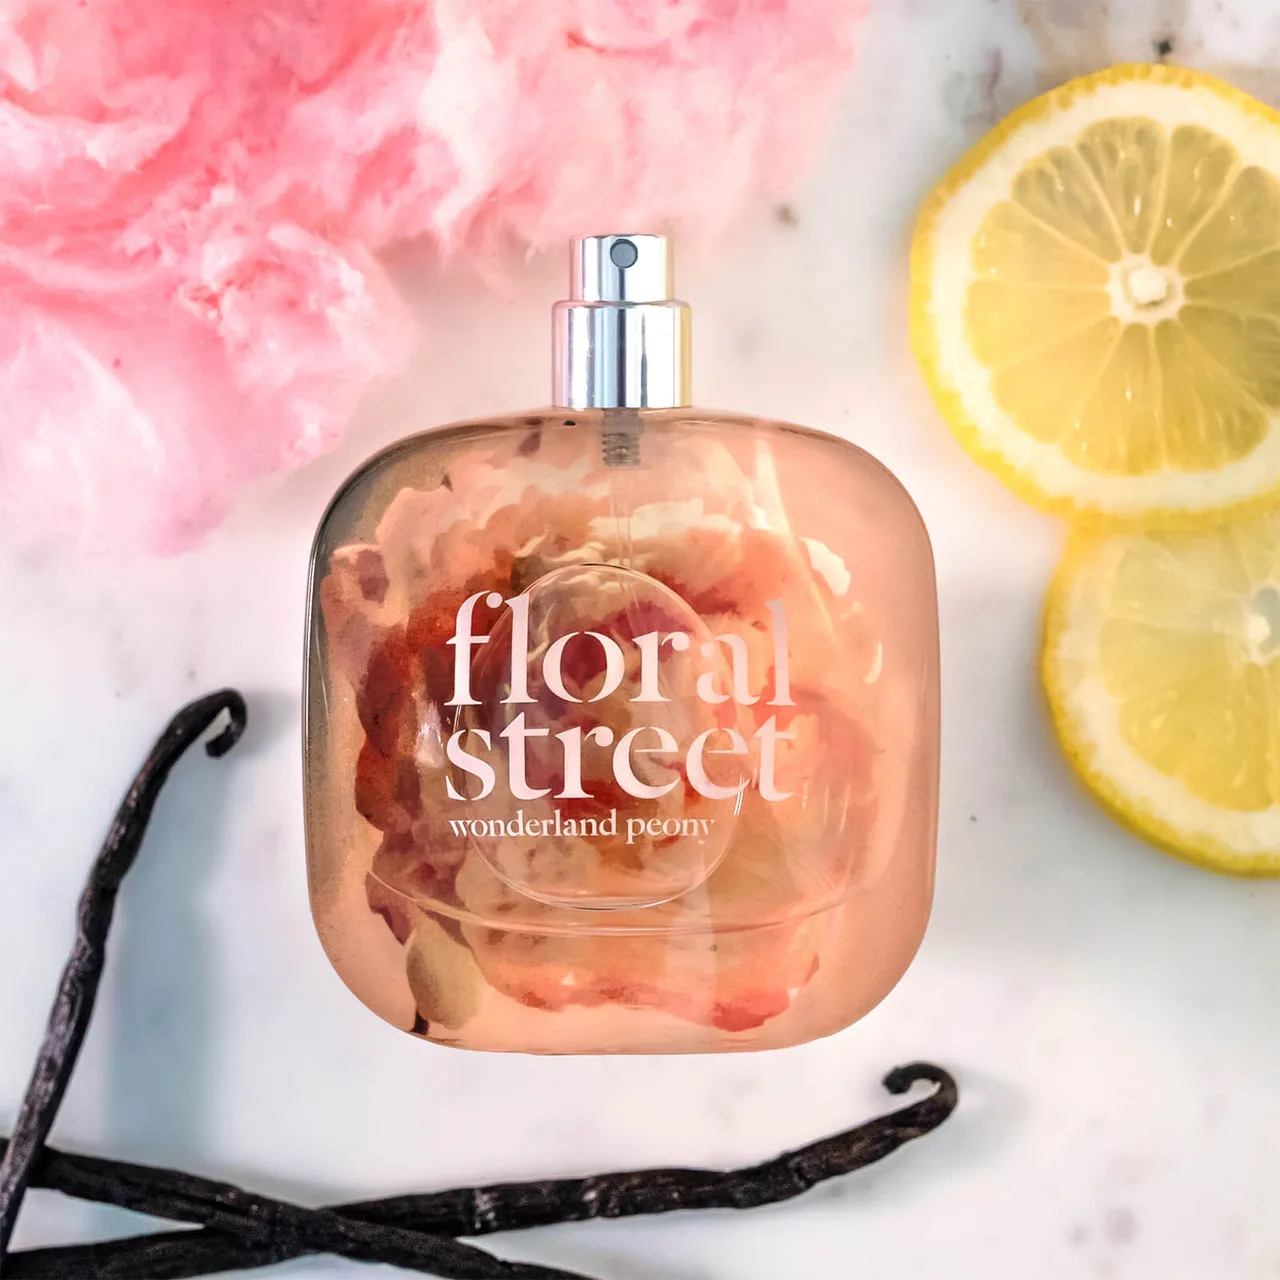 Floral Street Wonderland Peony Eau de Parfum 50ml